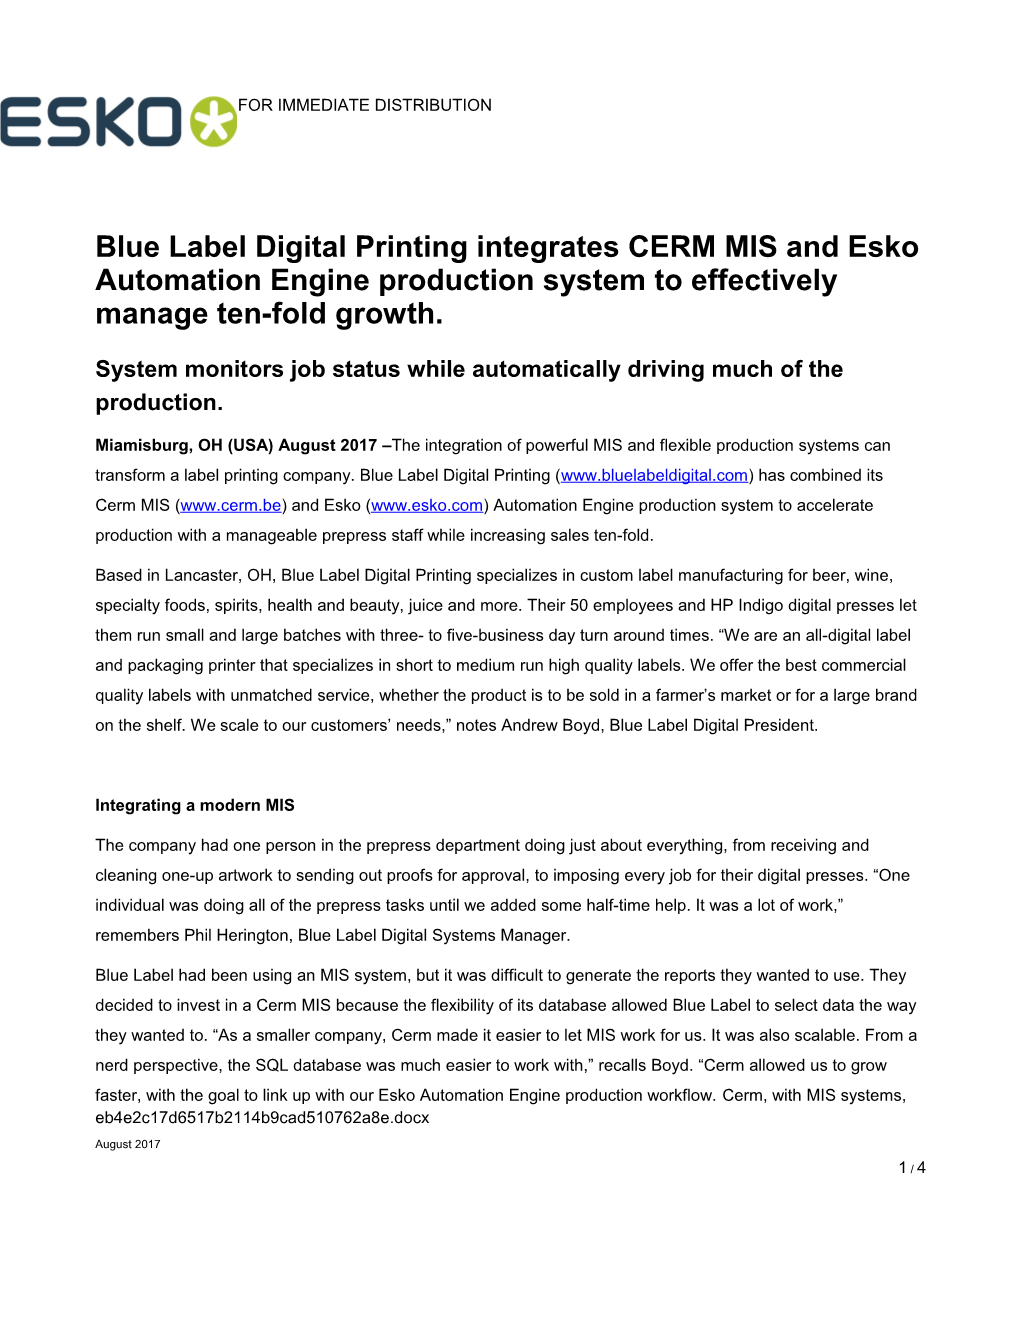 Blue Label Digital Printing Integrates CERM MIS and Esko Automation Engine Production System